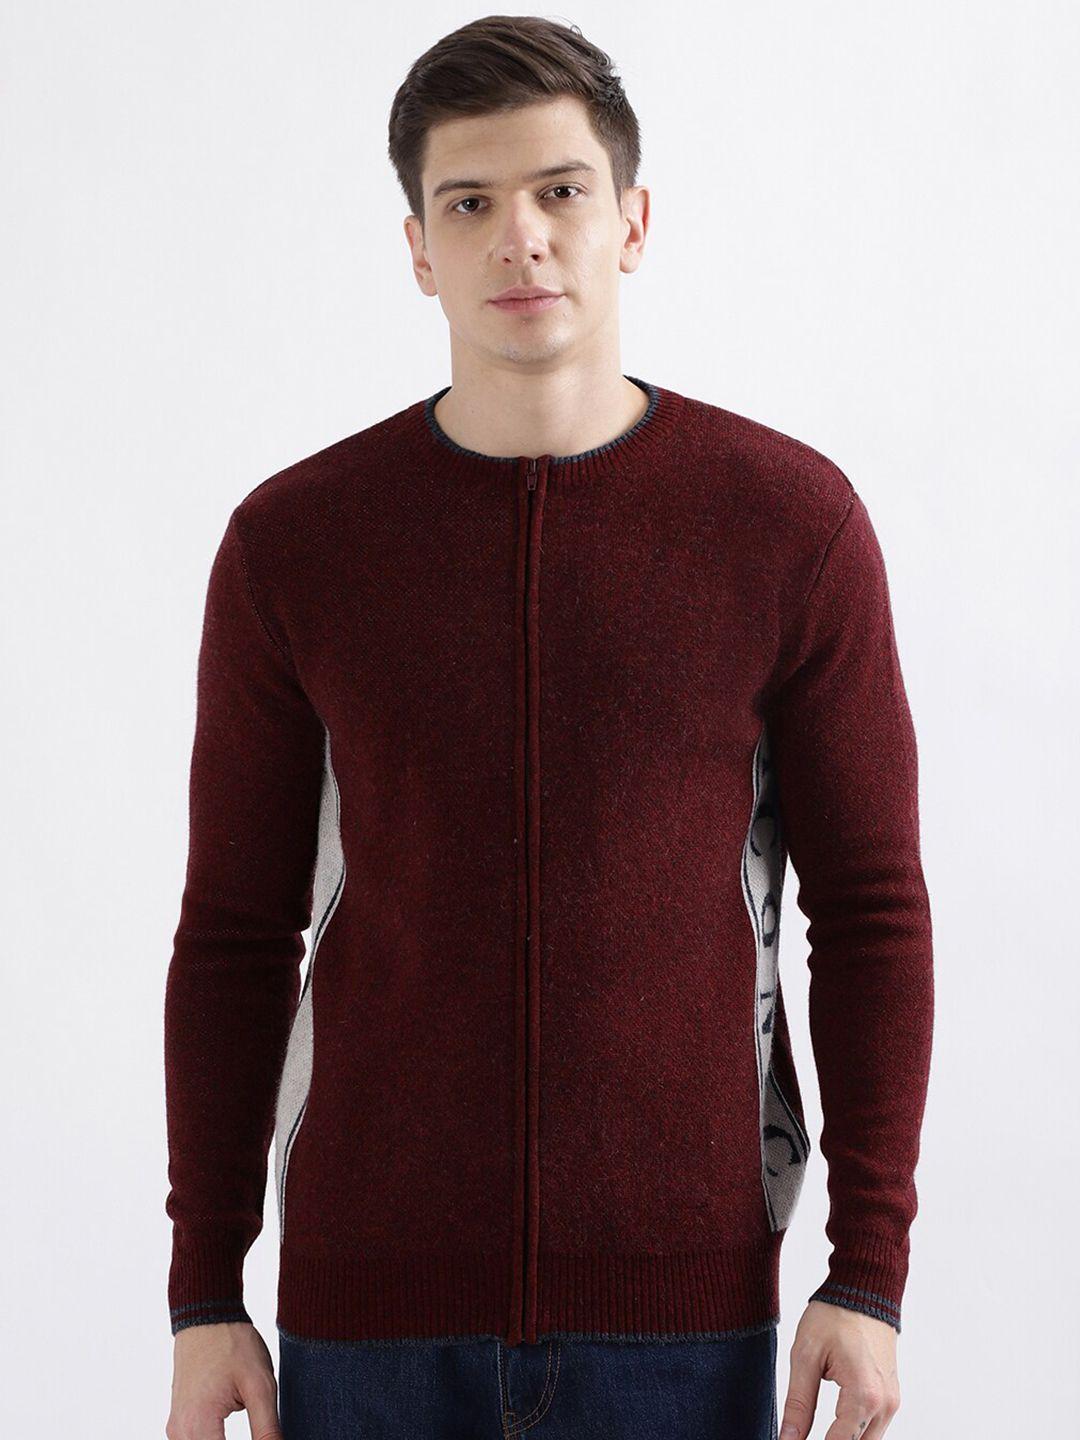 iconic round neck woollen cardigan sweater